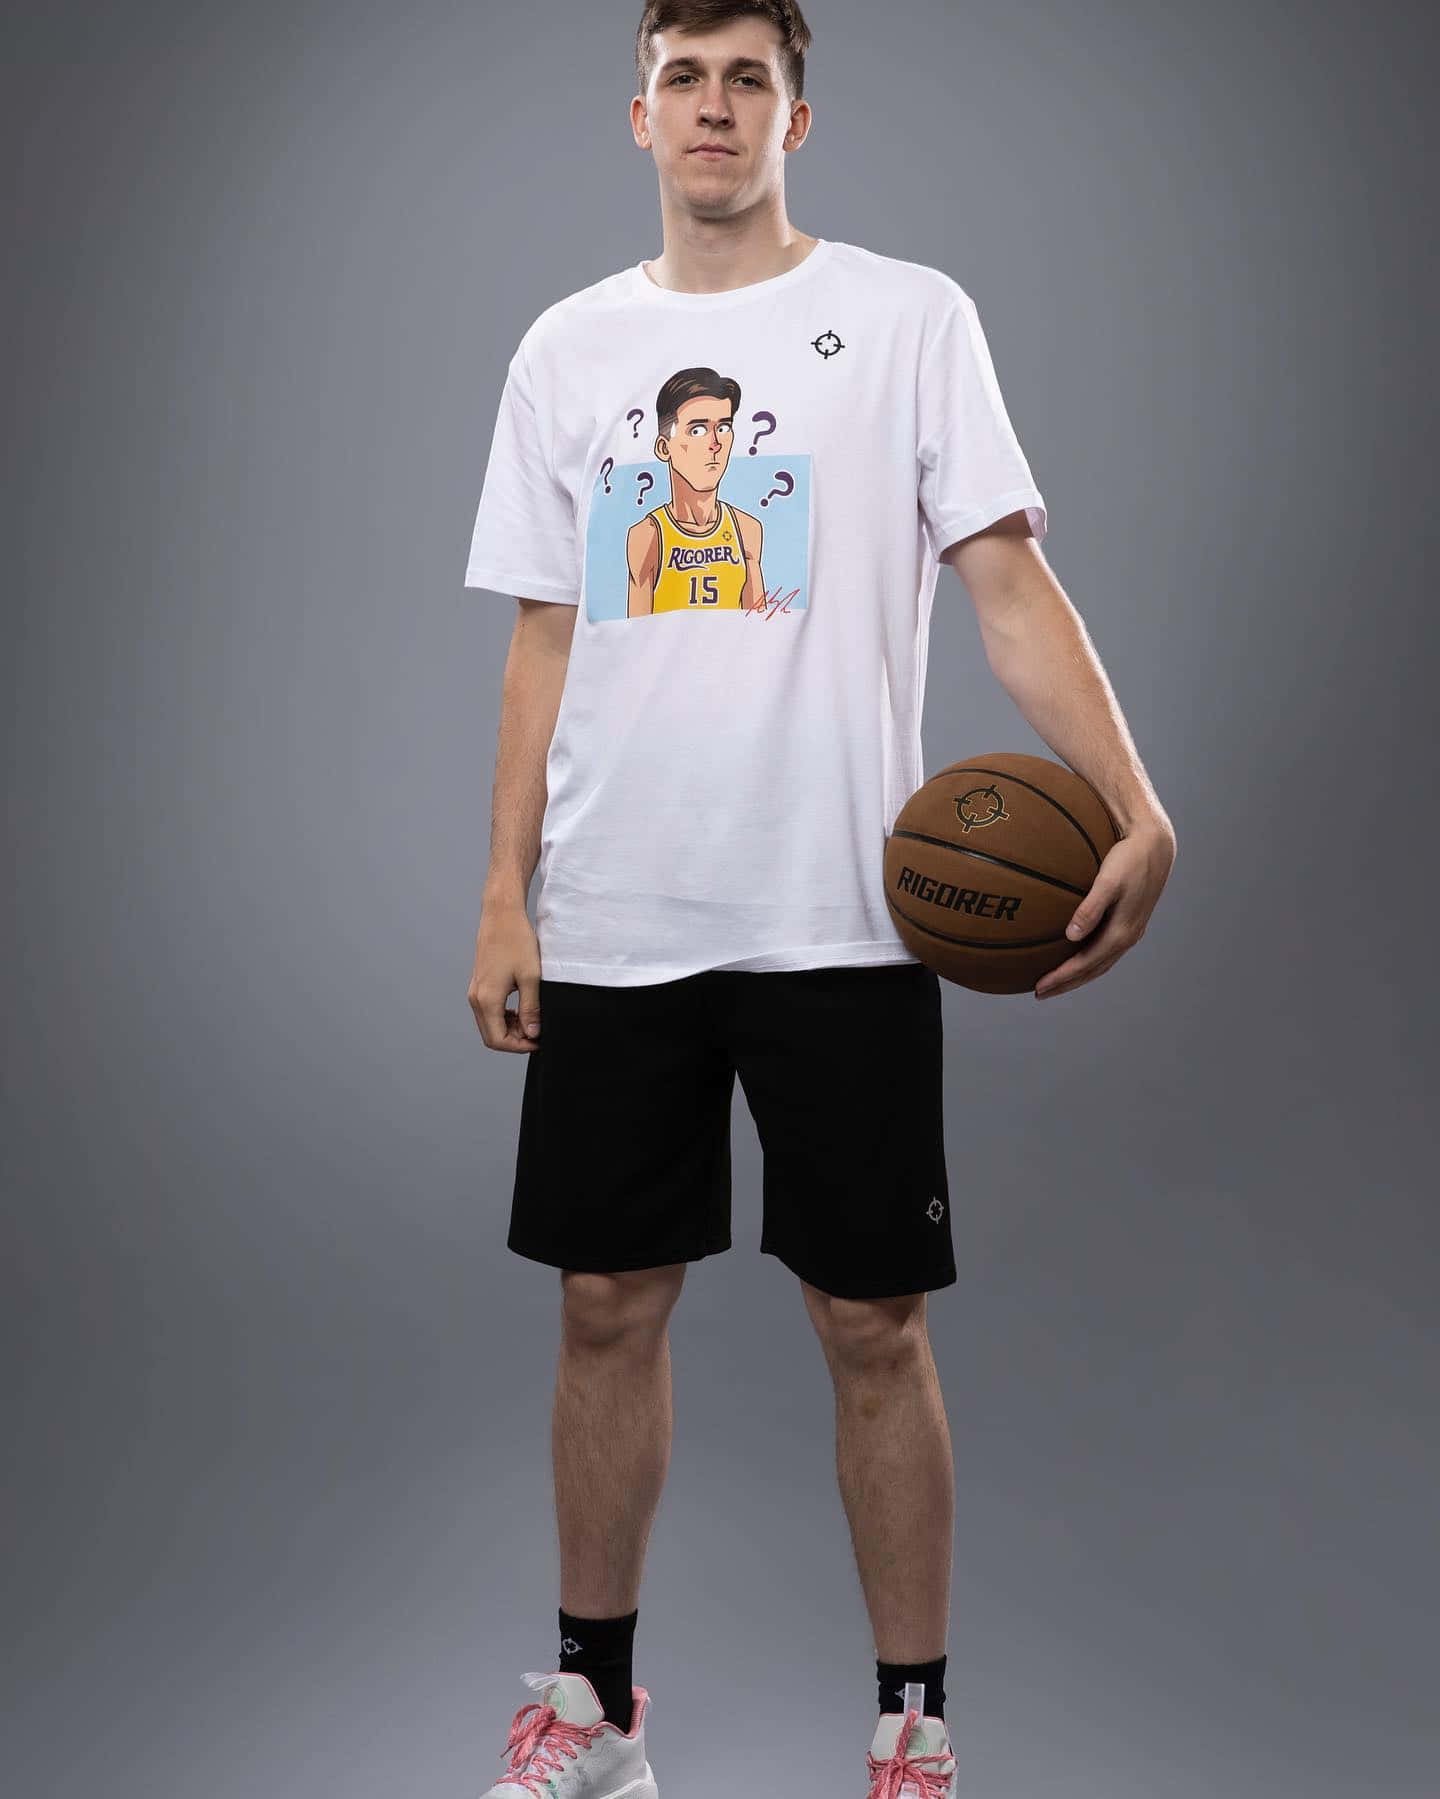 Basketball Player Austin Reaves Portrait Wallpaper